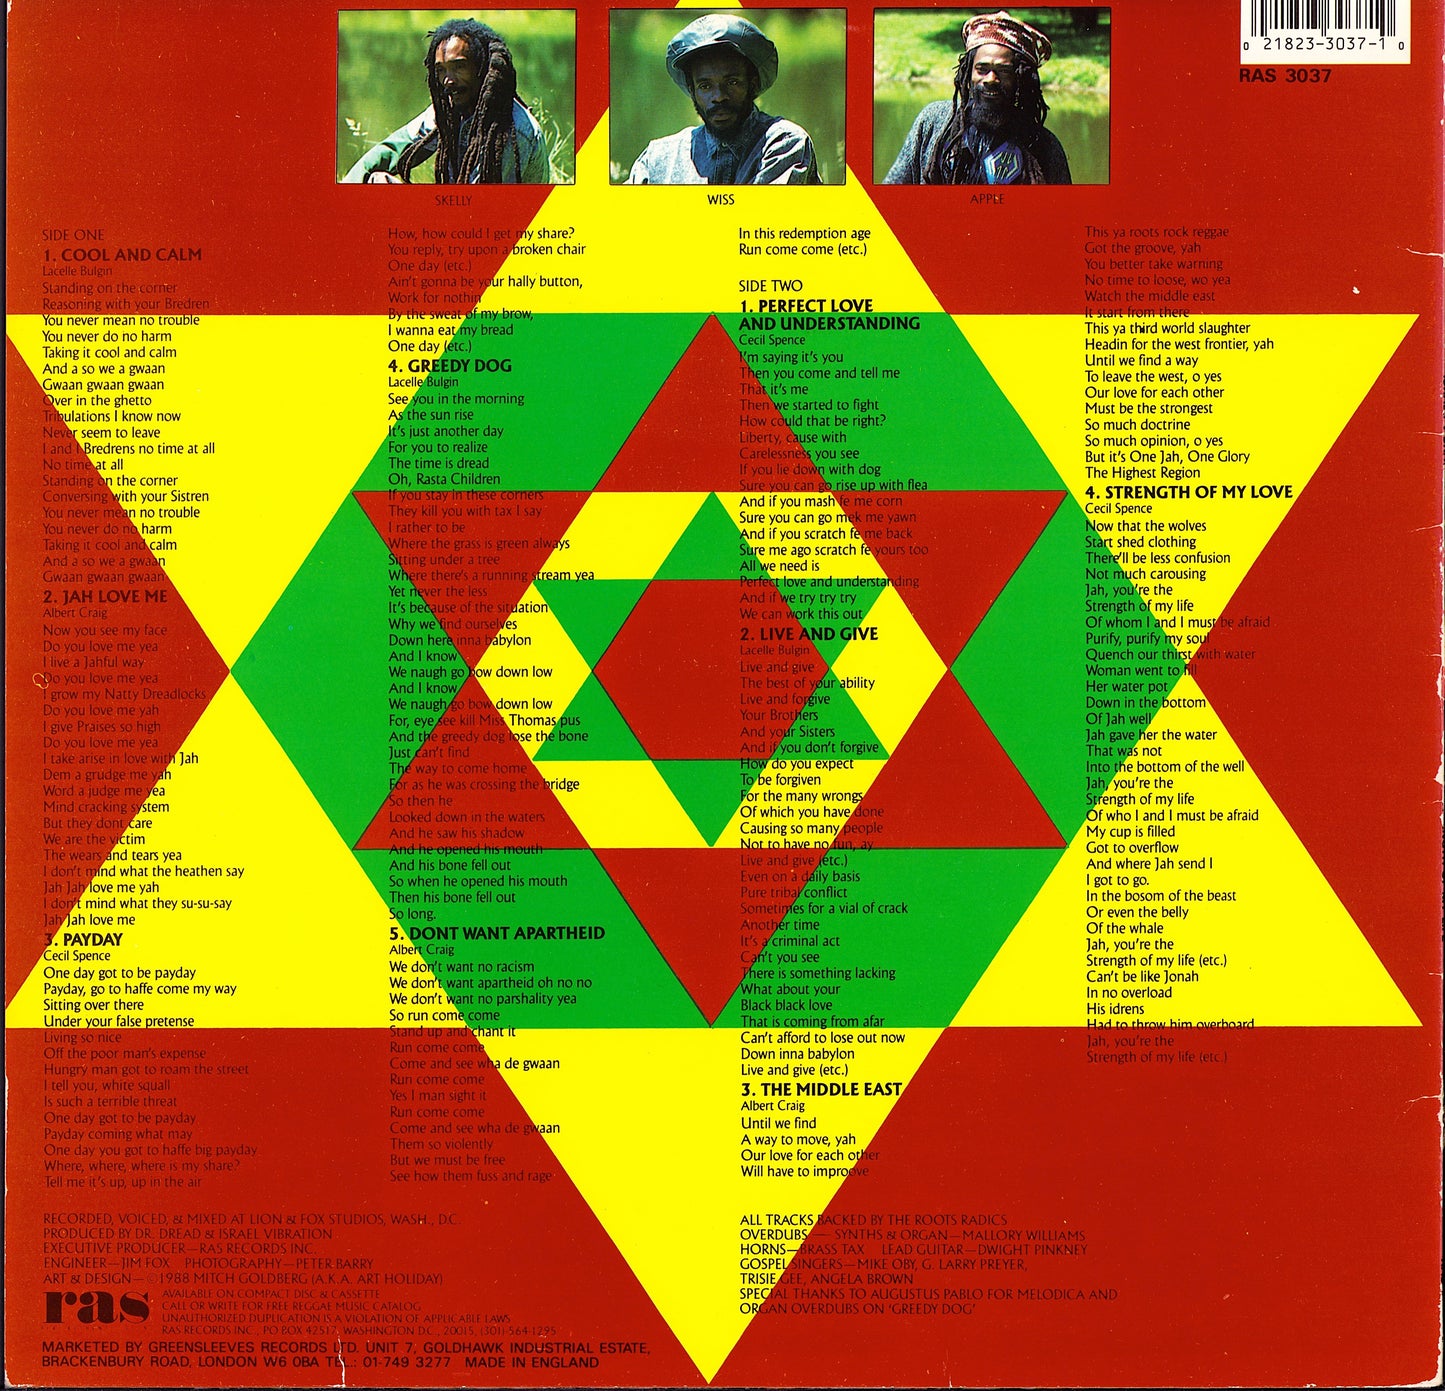 Israel Vibration - Strength Of My Life Vinyl LP